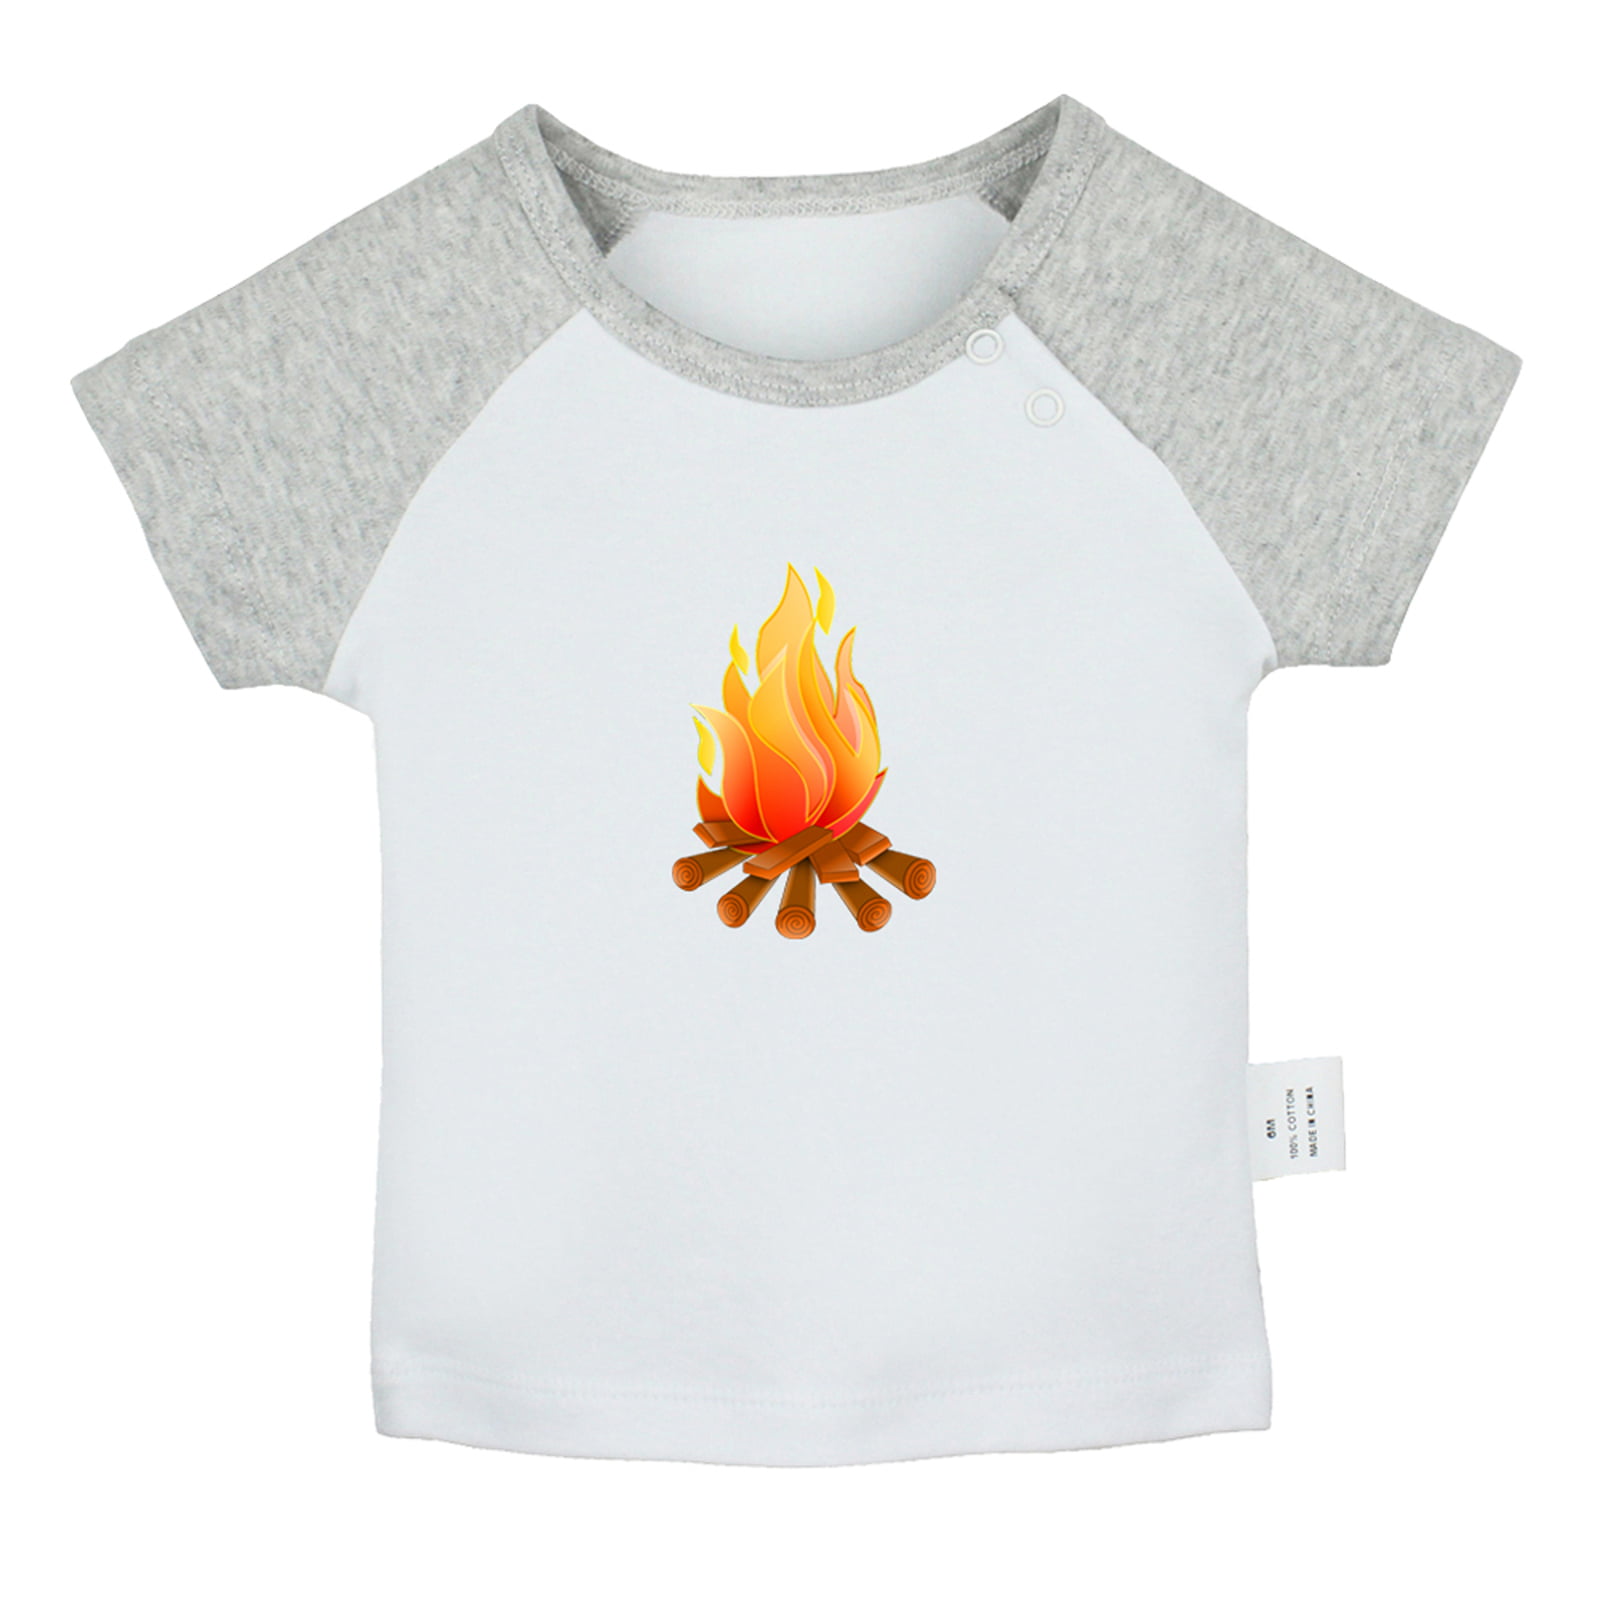 Nature Bonfire T shirt For Baby, Newborn Babies T-shirts, Infant 0-24M Kids Graphic Tees Clothing (Short Gray Raglan T-shirt, 18-24 Months) - Walmart.com